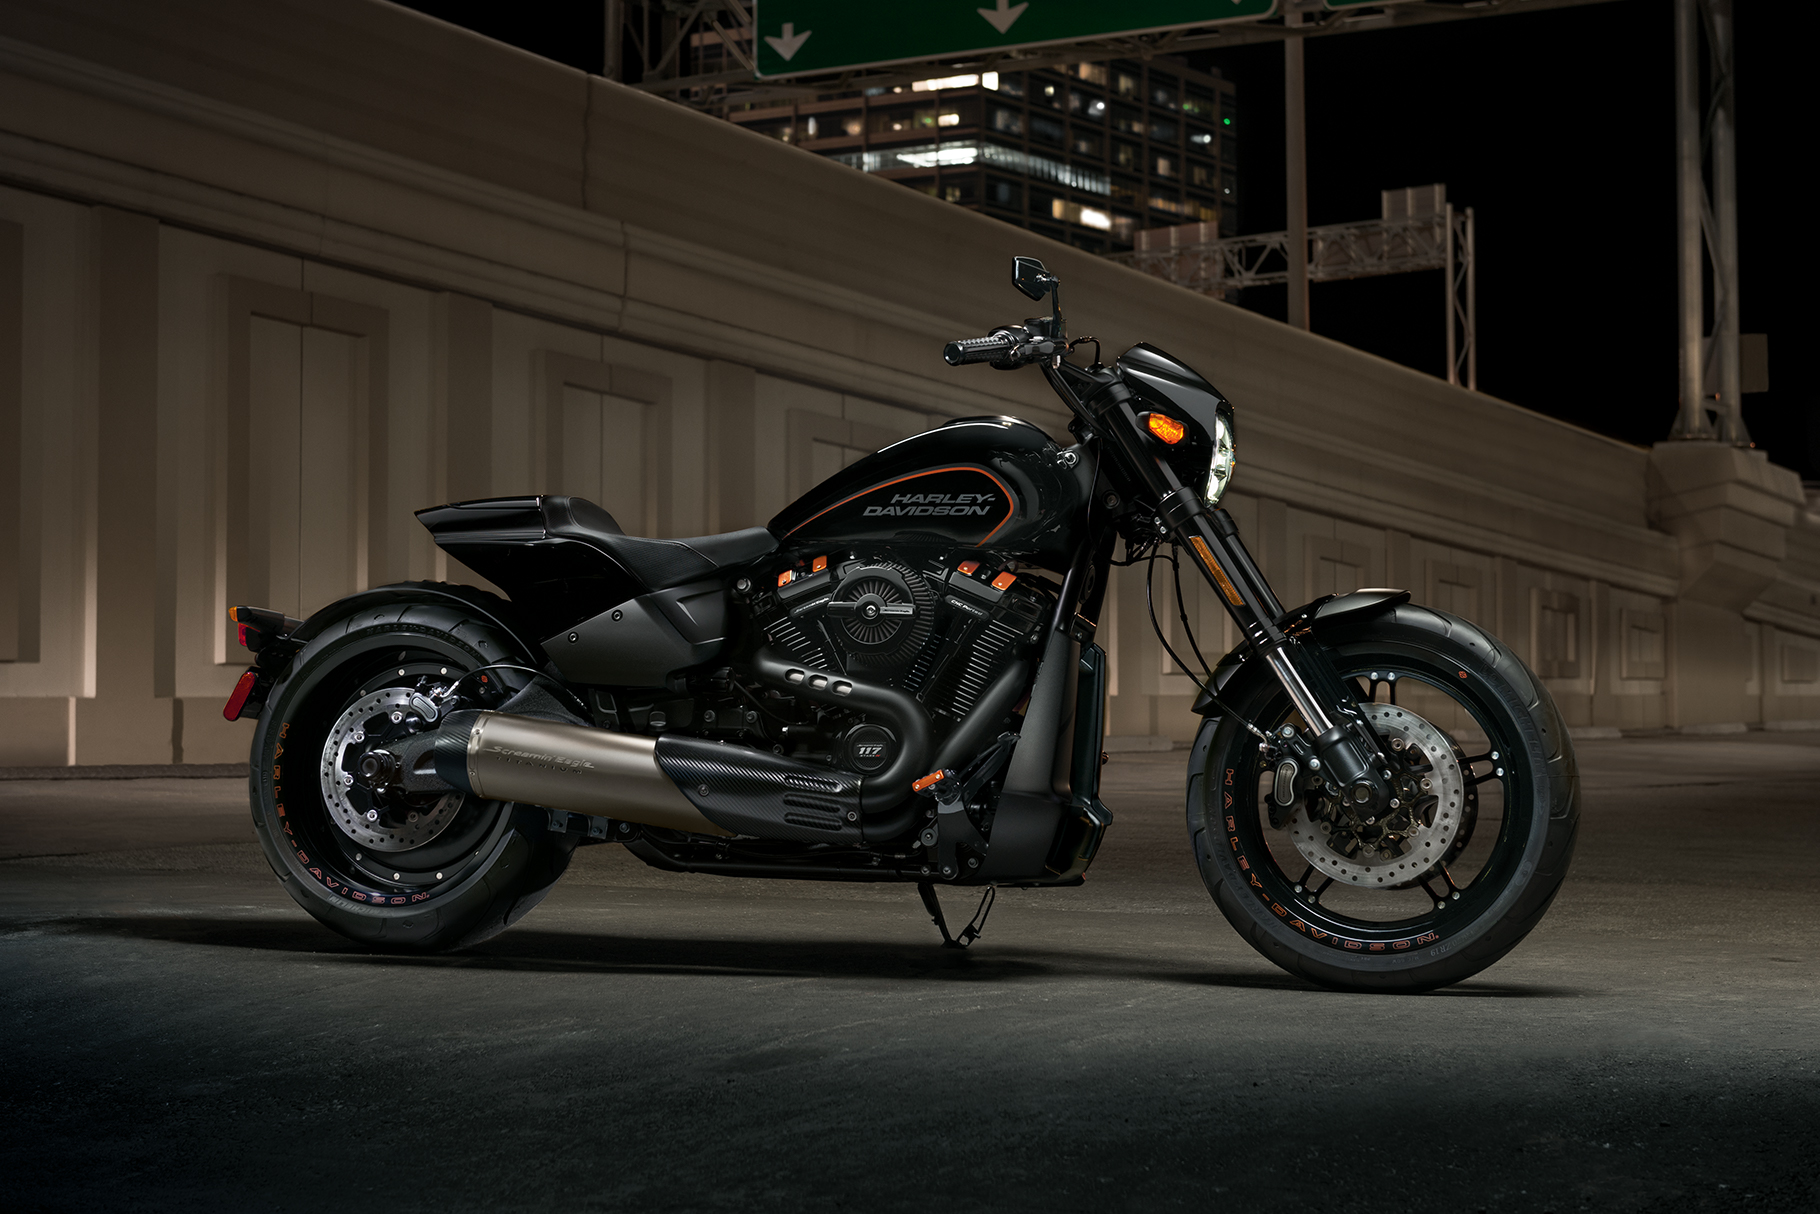  2019 FXDR Motorcycle Harley Davidson USA